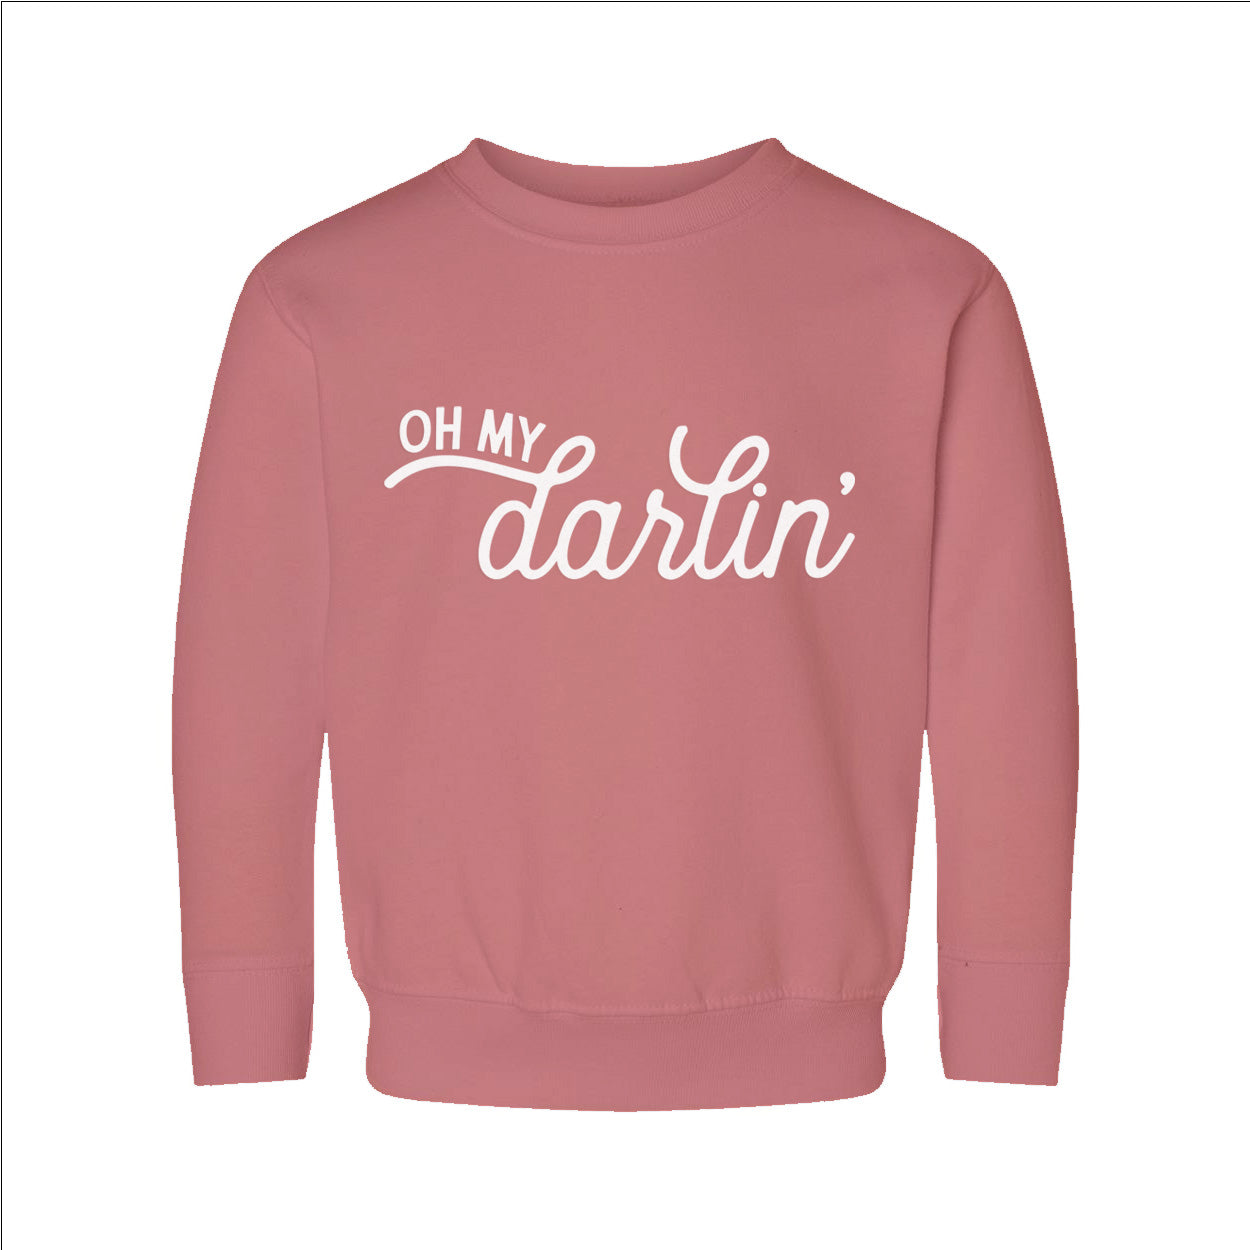 Oh My Darlin' Cursive Kids Sweatshirt